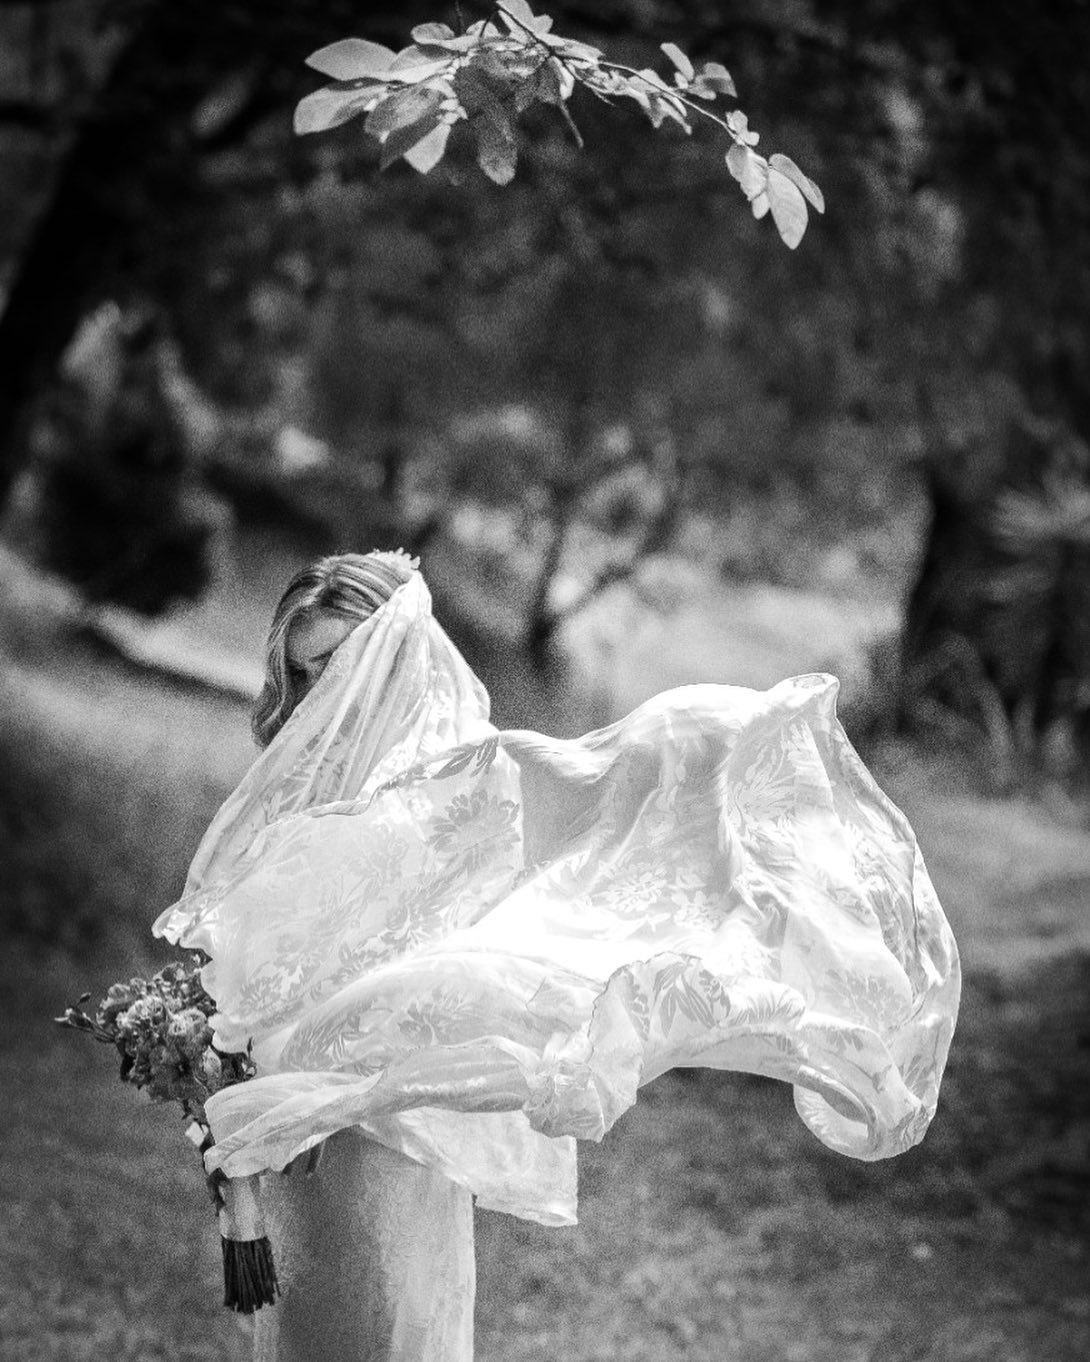 Sparks Fly.

#weddingphotography #wedding #weddinginspiration #bride #weddingphotographer #photography #love #weddings #photographer #photooftheday #weddingphoto #instawedding #couplegoals #brideandgroom #photoshoot